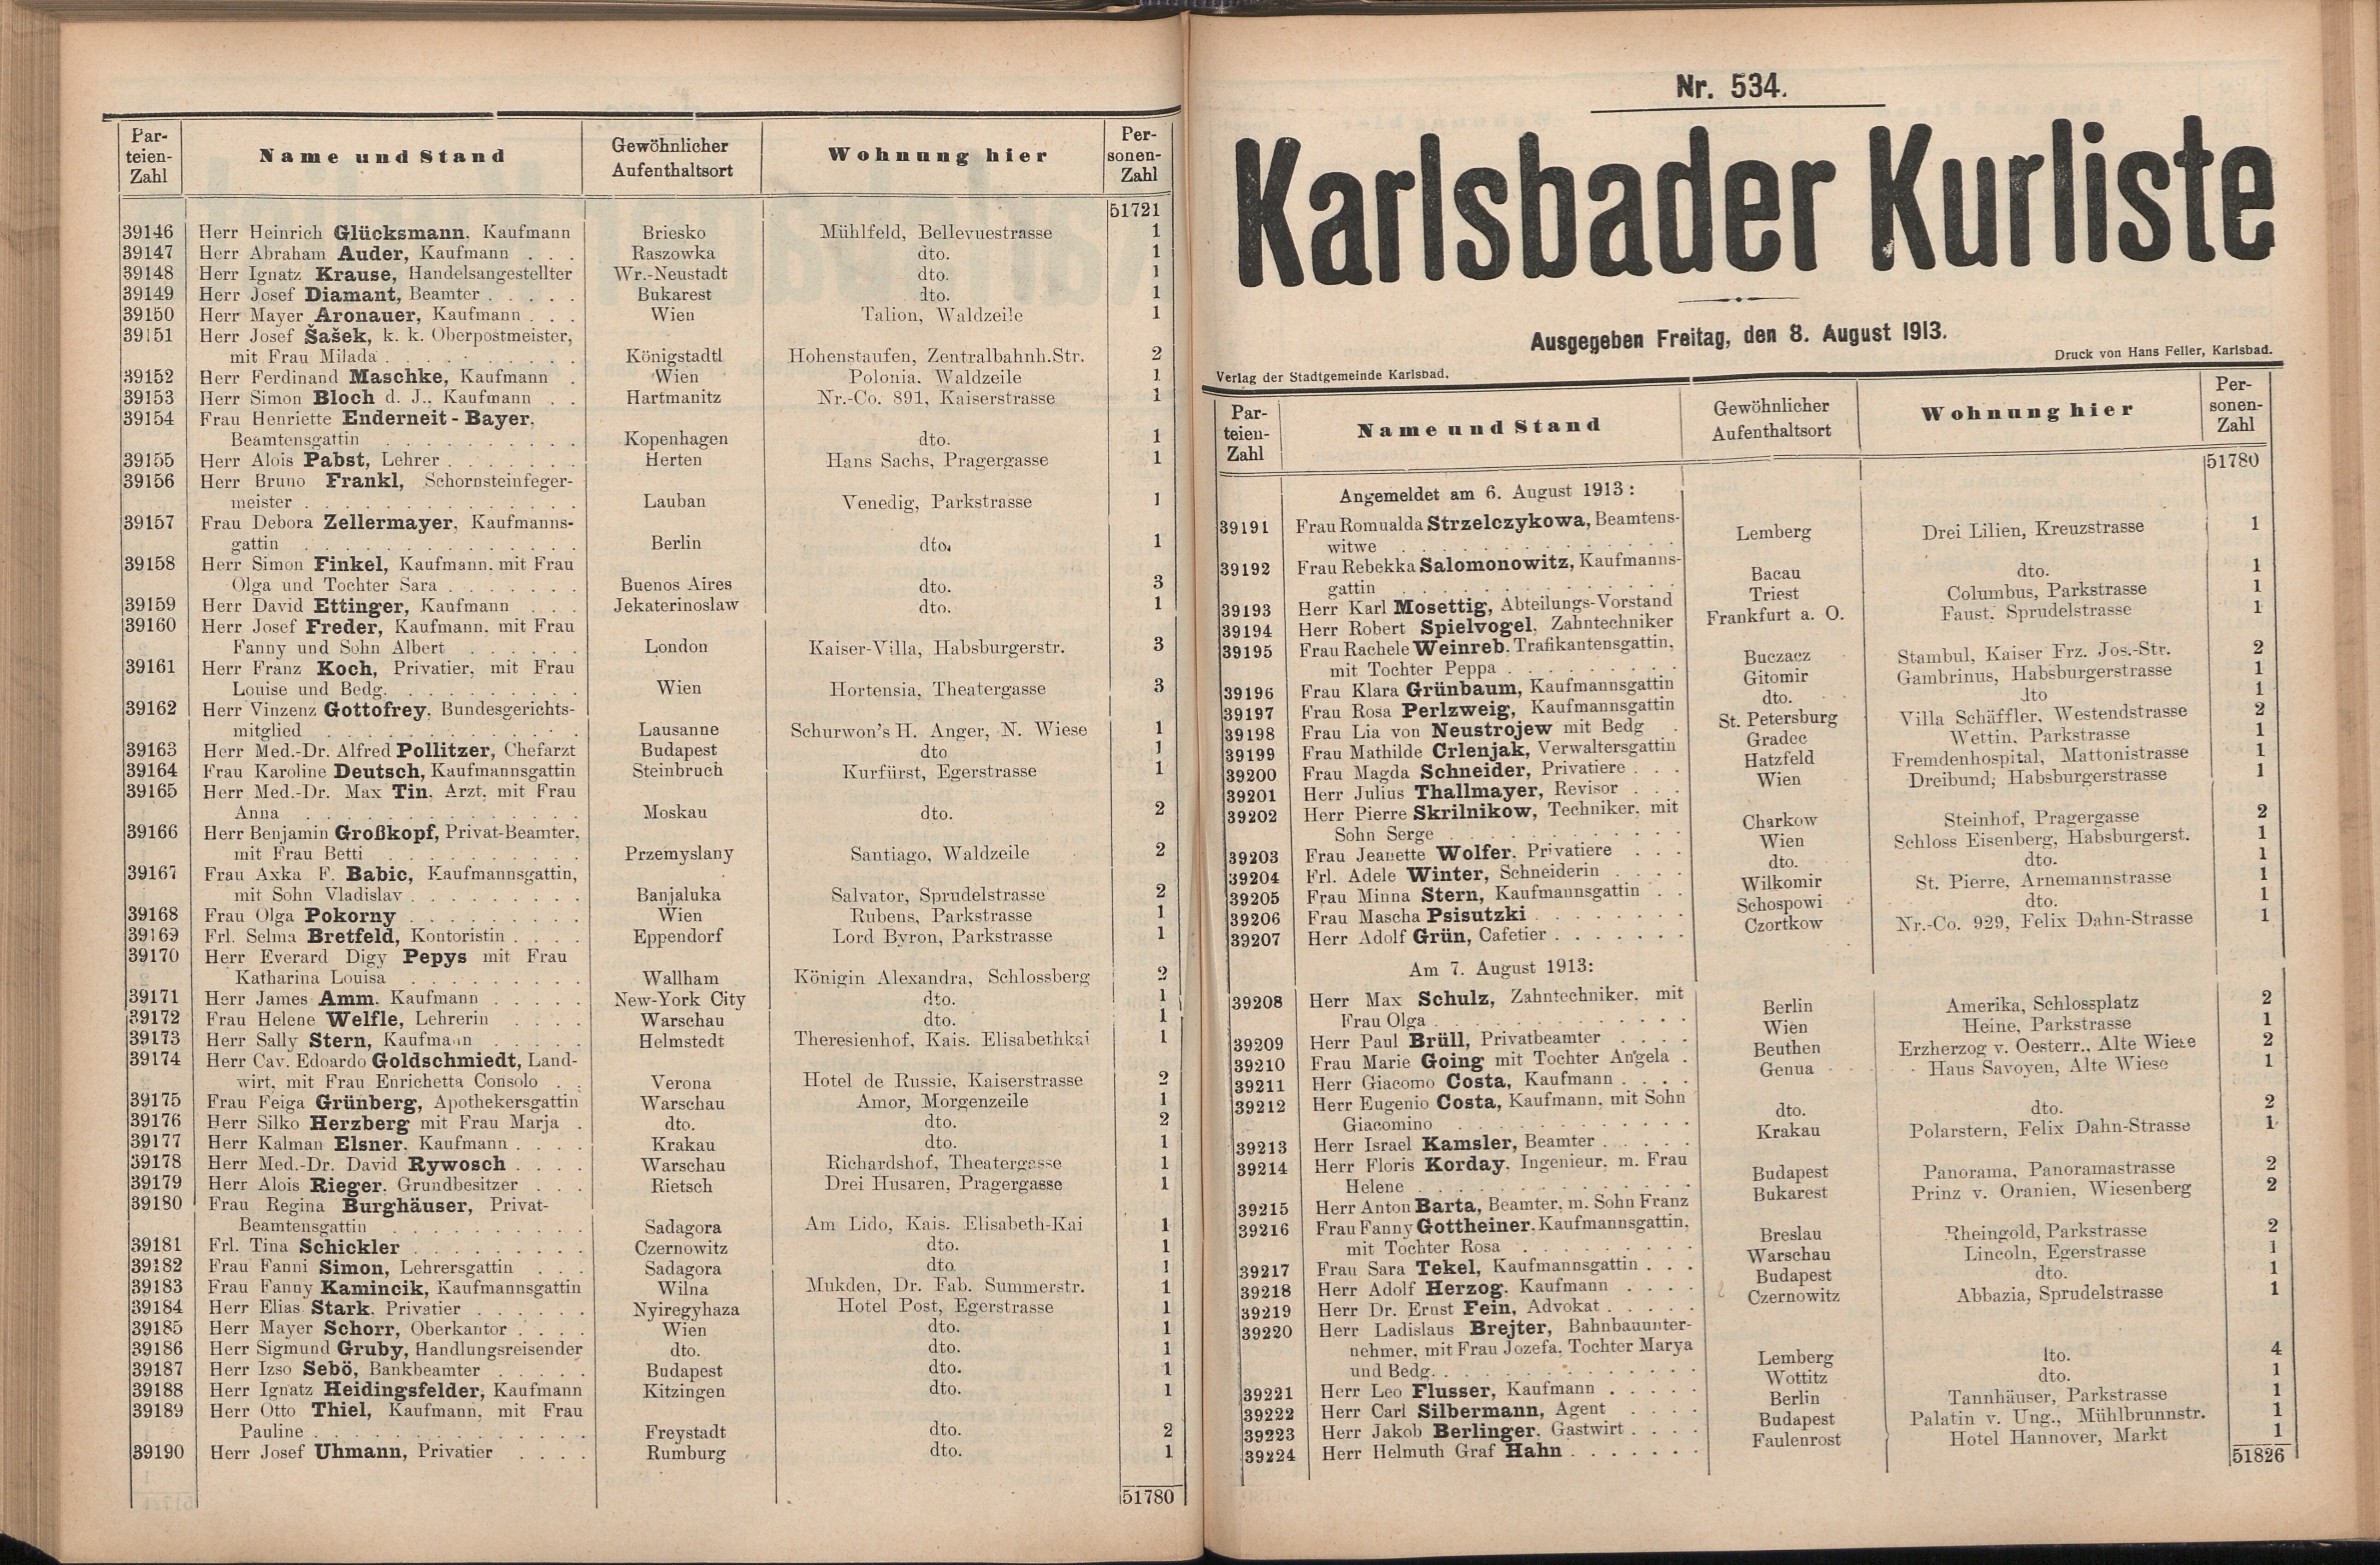 270. soap-kv_knihovna_karlsbader-kurliste-1913-2_2700